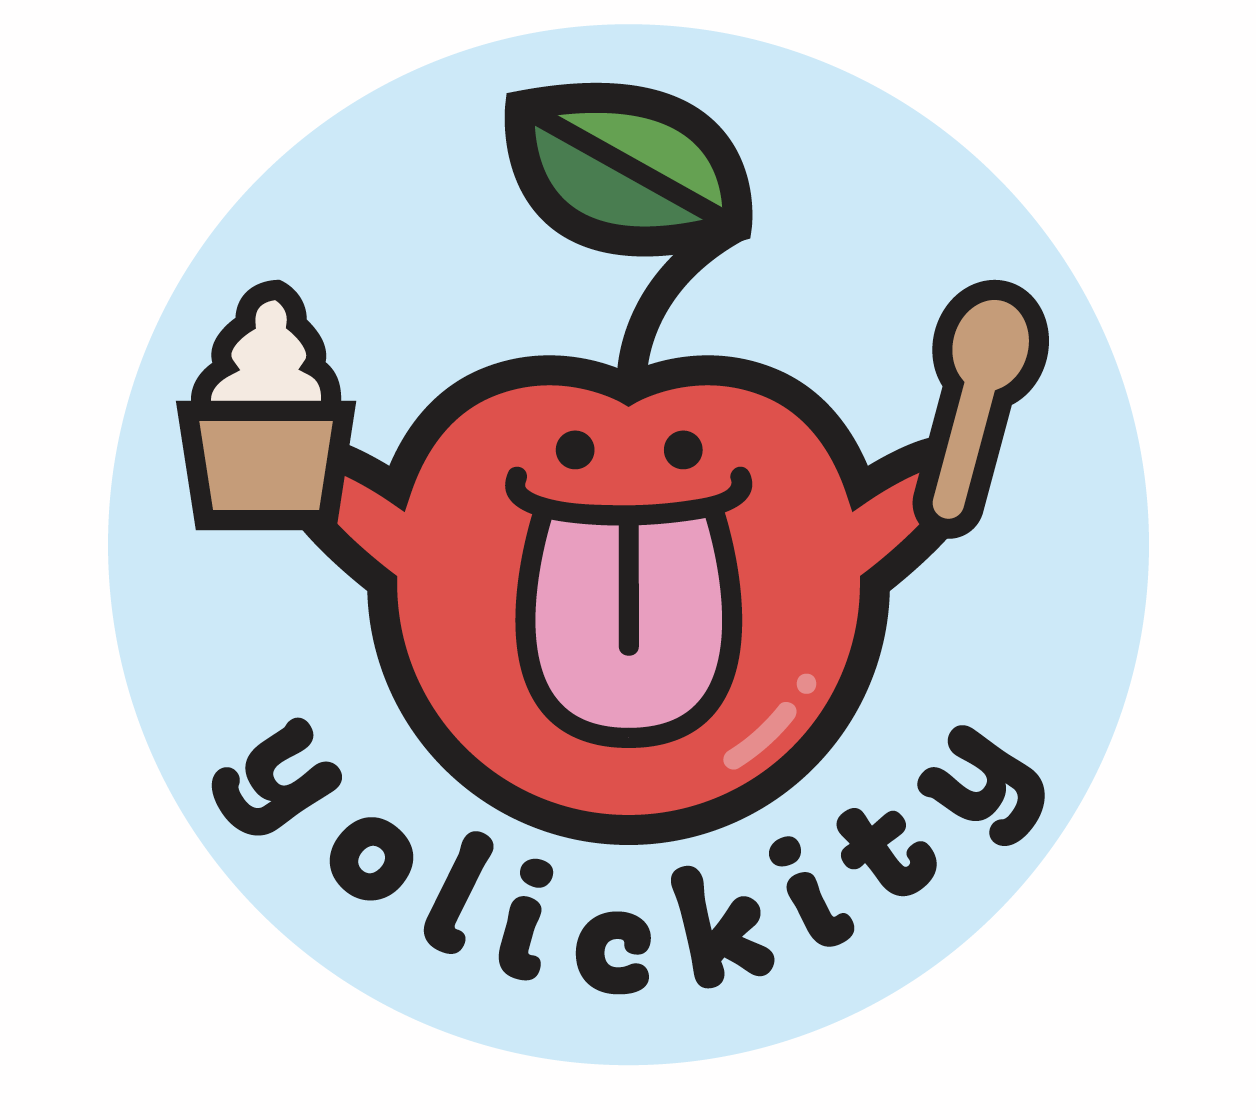 Yolickity logo redesign